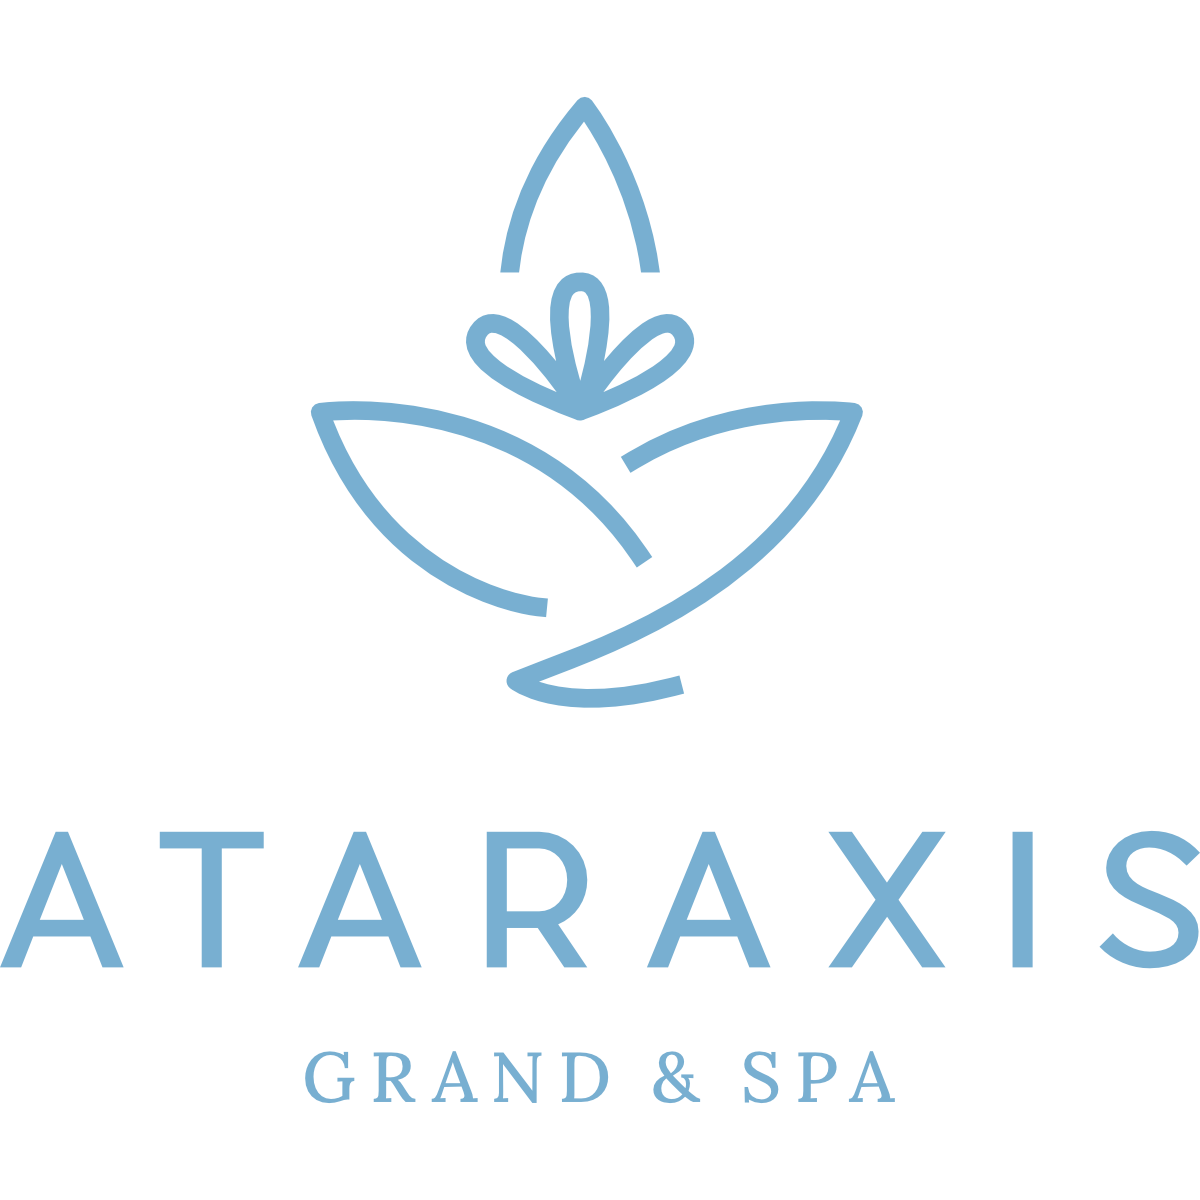 Ataraxis Grand & Spa